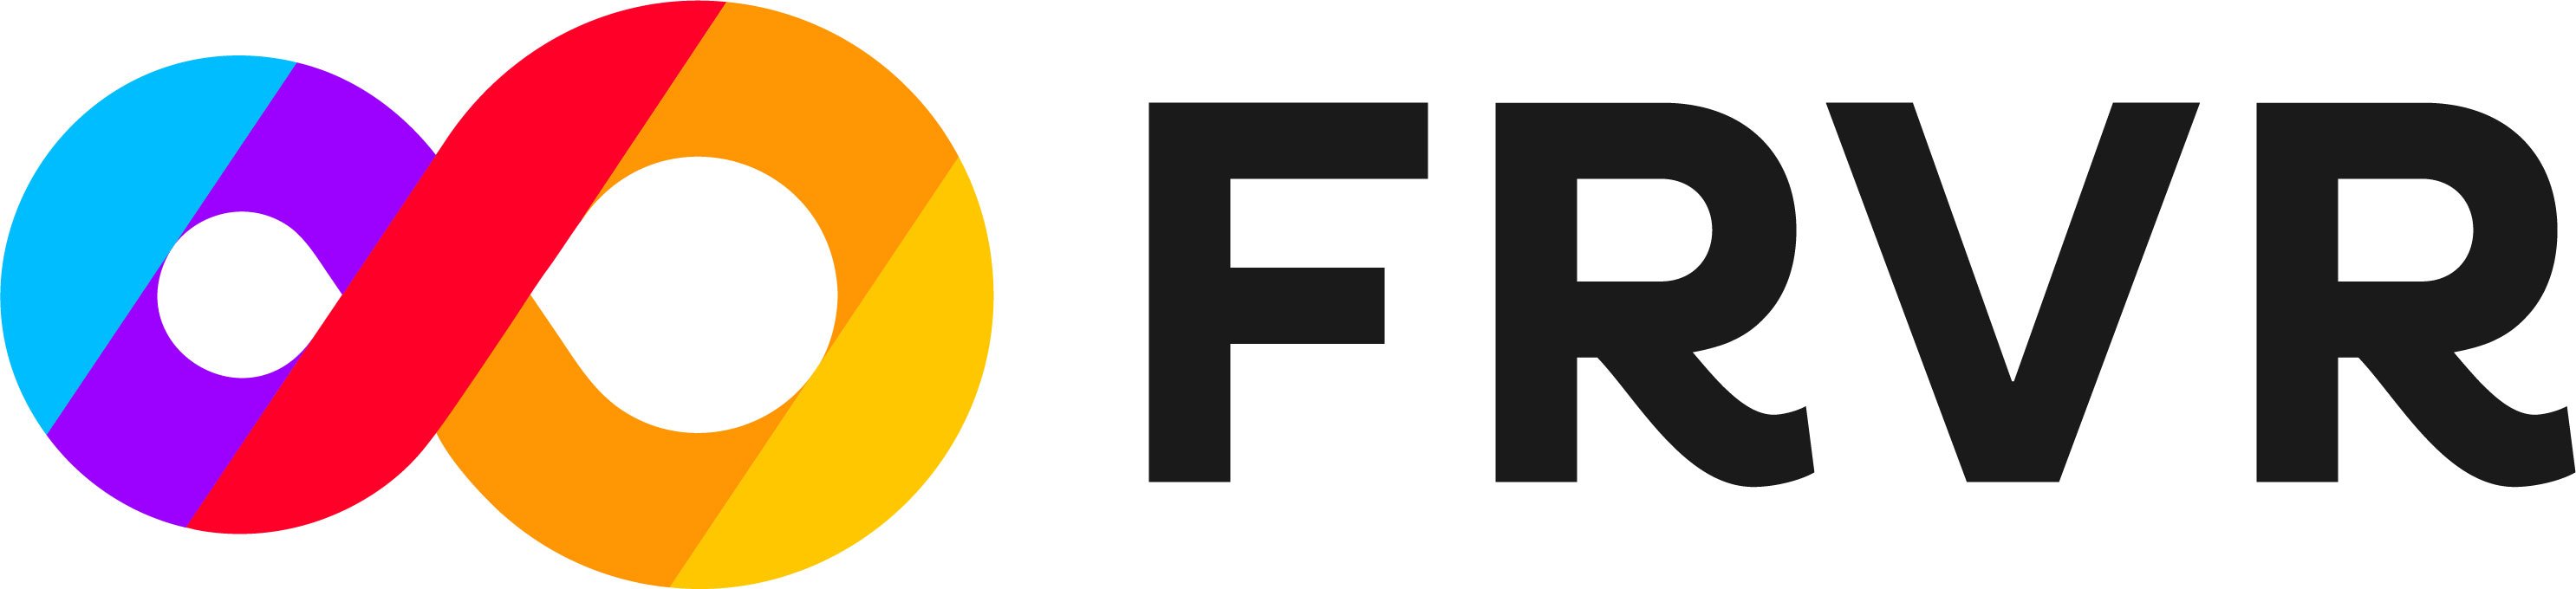 Frvr logo rgb